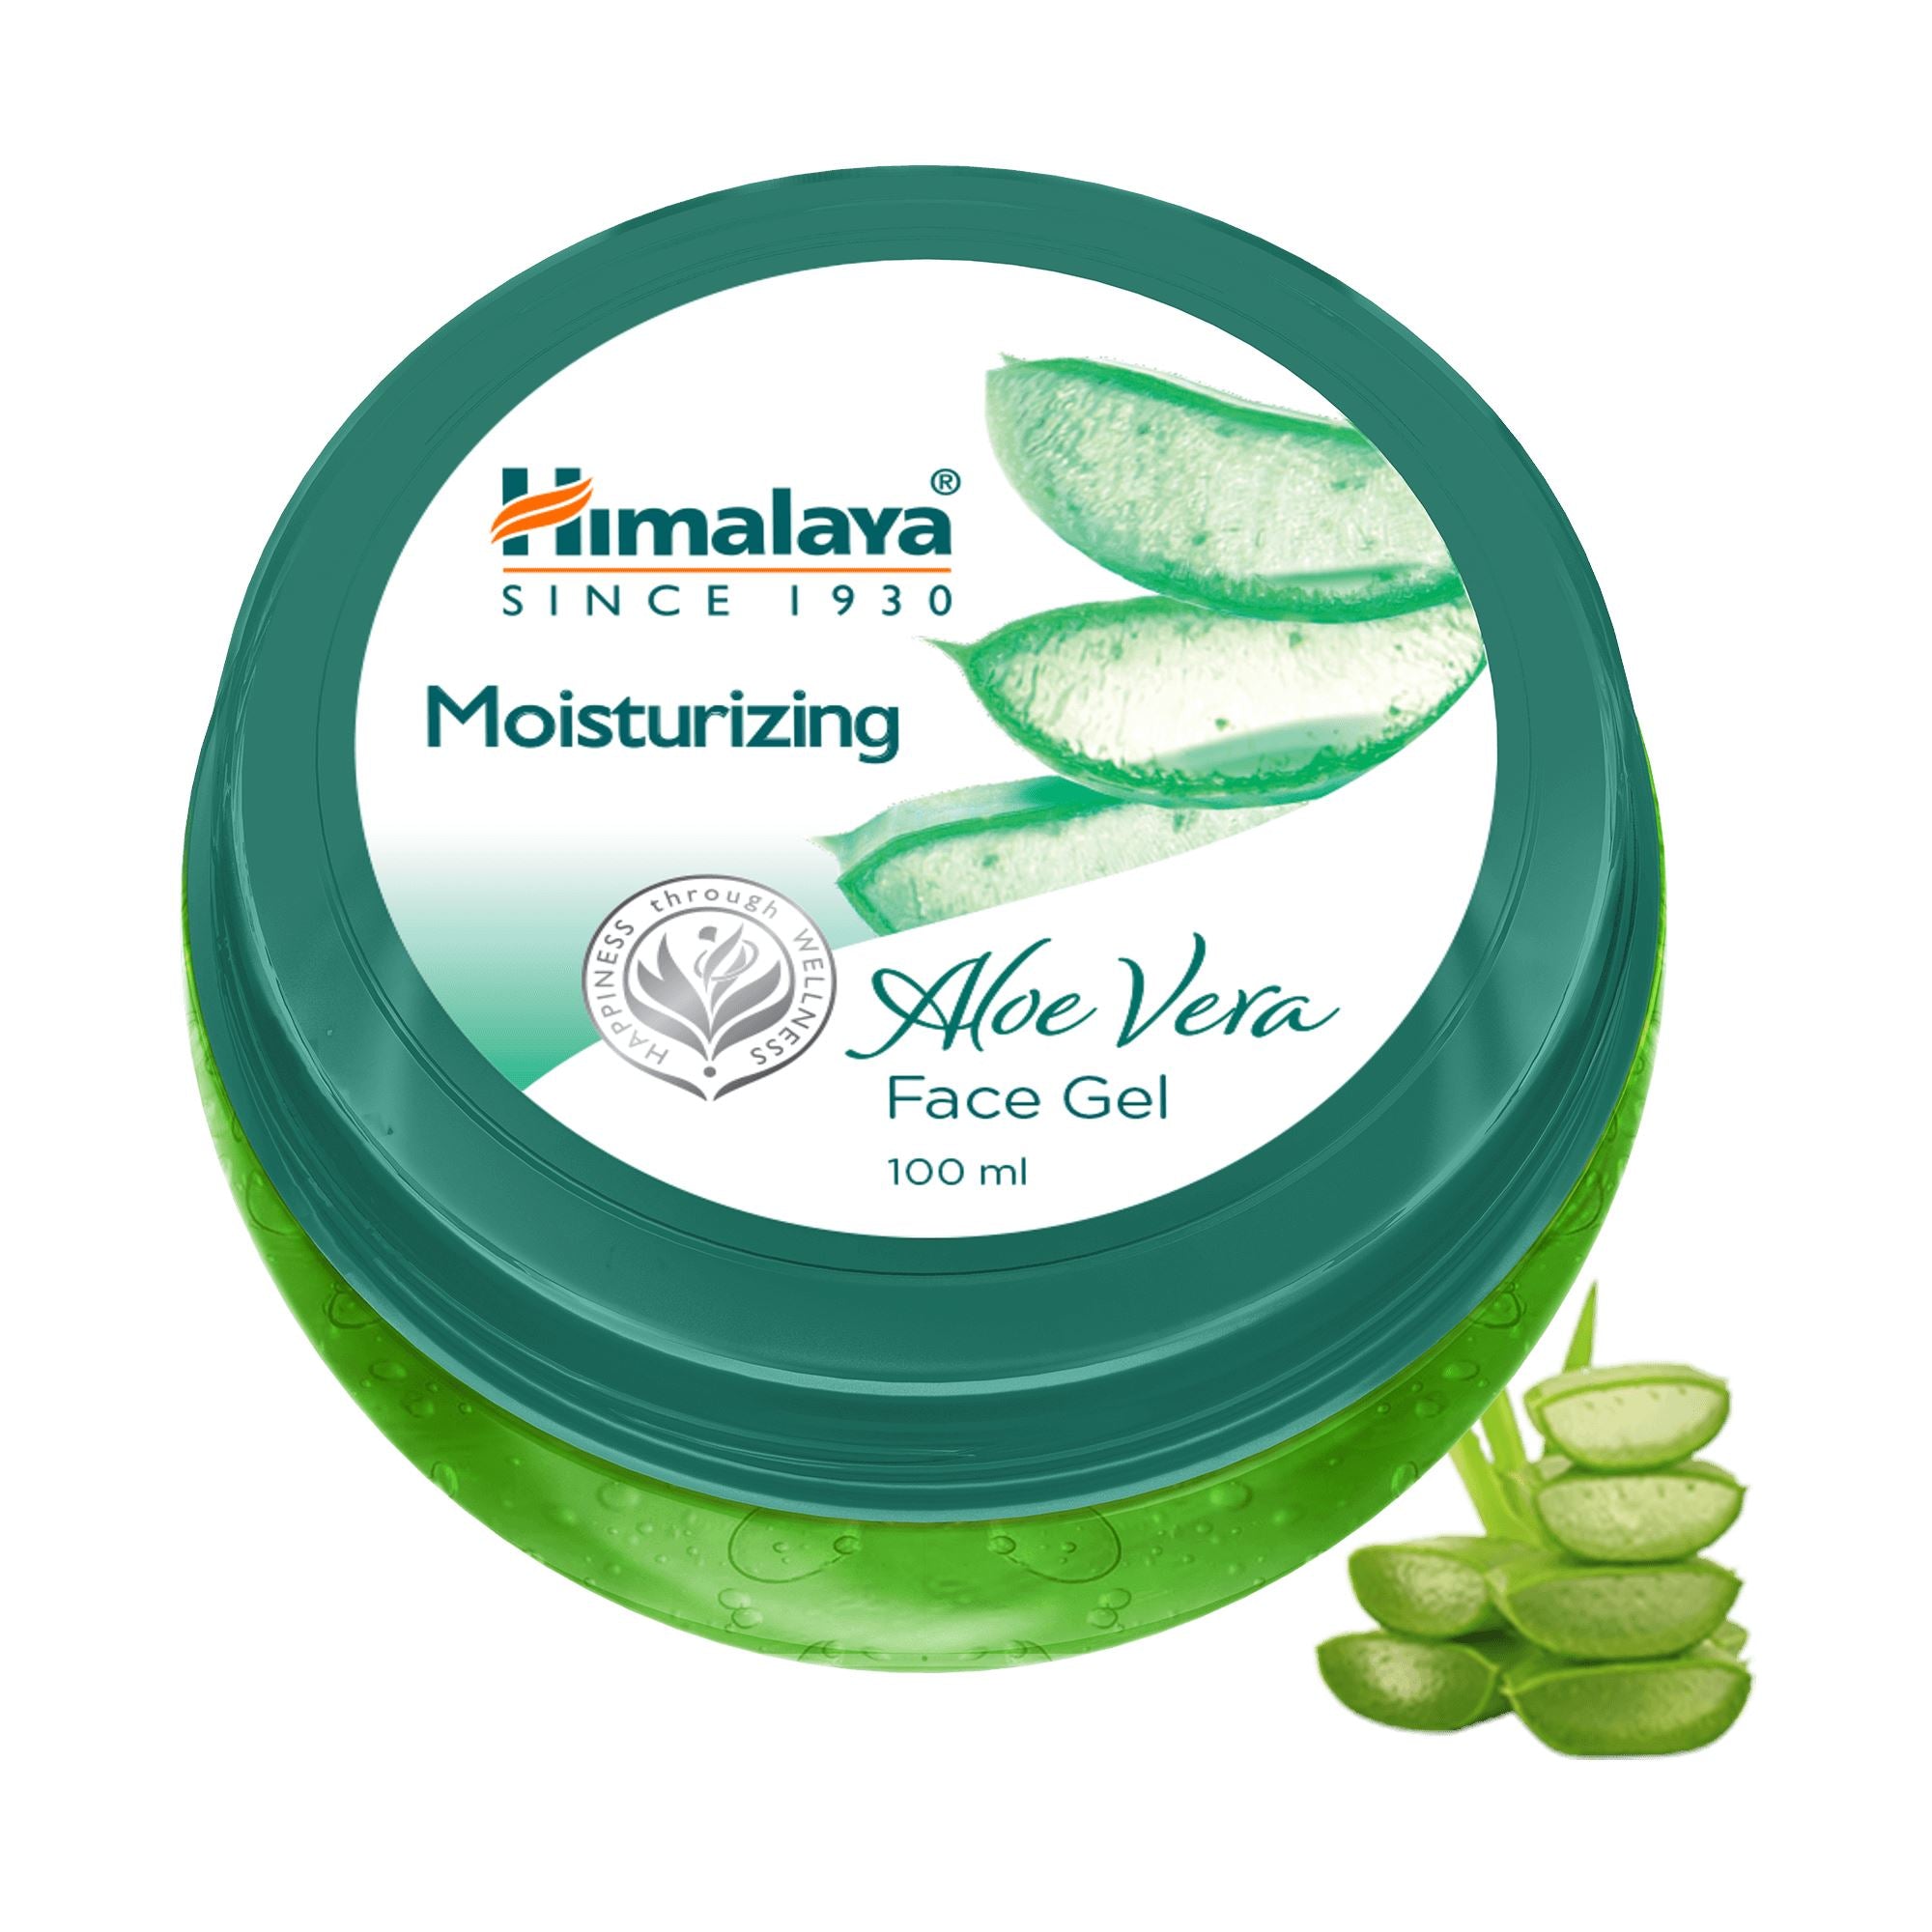 Himalaya Moisturizing Aloe Vera Face Gel Hydrates Skin Himalaya Wellness India 9461